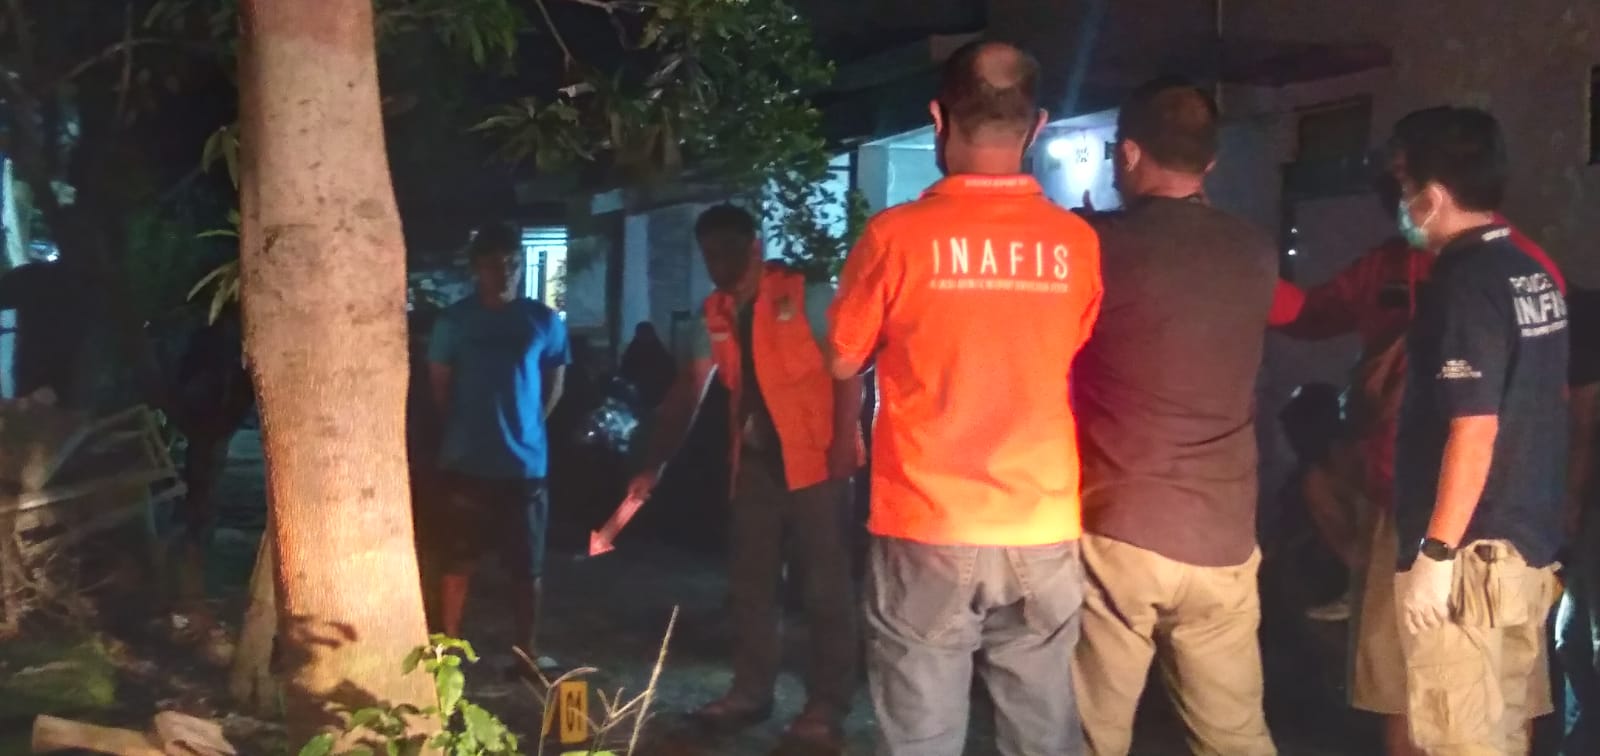 Ilustrasi: Olah TKP Tim Inafis Polresta Bandung terhadap kasus pembunuhan di wilayah Perumahan Griya, Desa Rancaekek Wetan, Kecamatan Rancaekek, Kabupaten Bandung. (Yanuar/Jabar Ekspres)